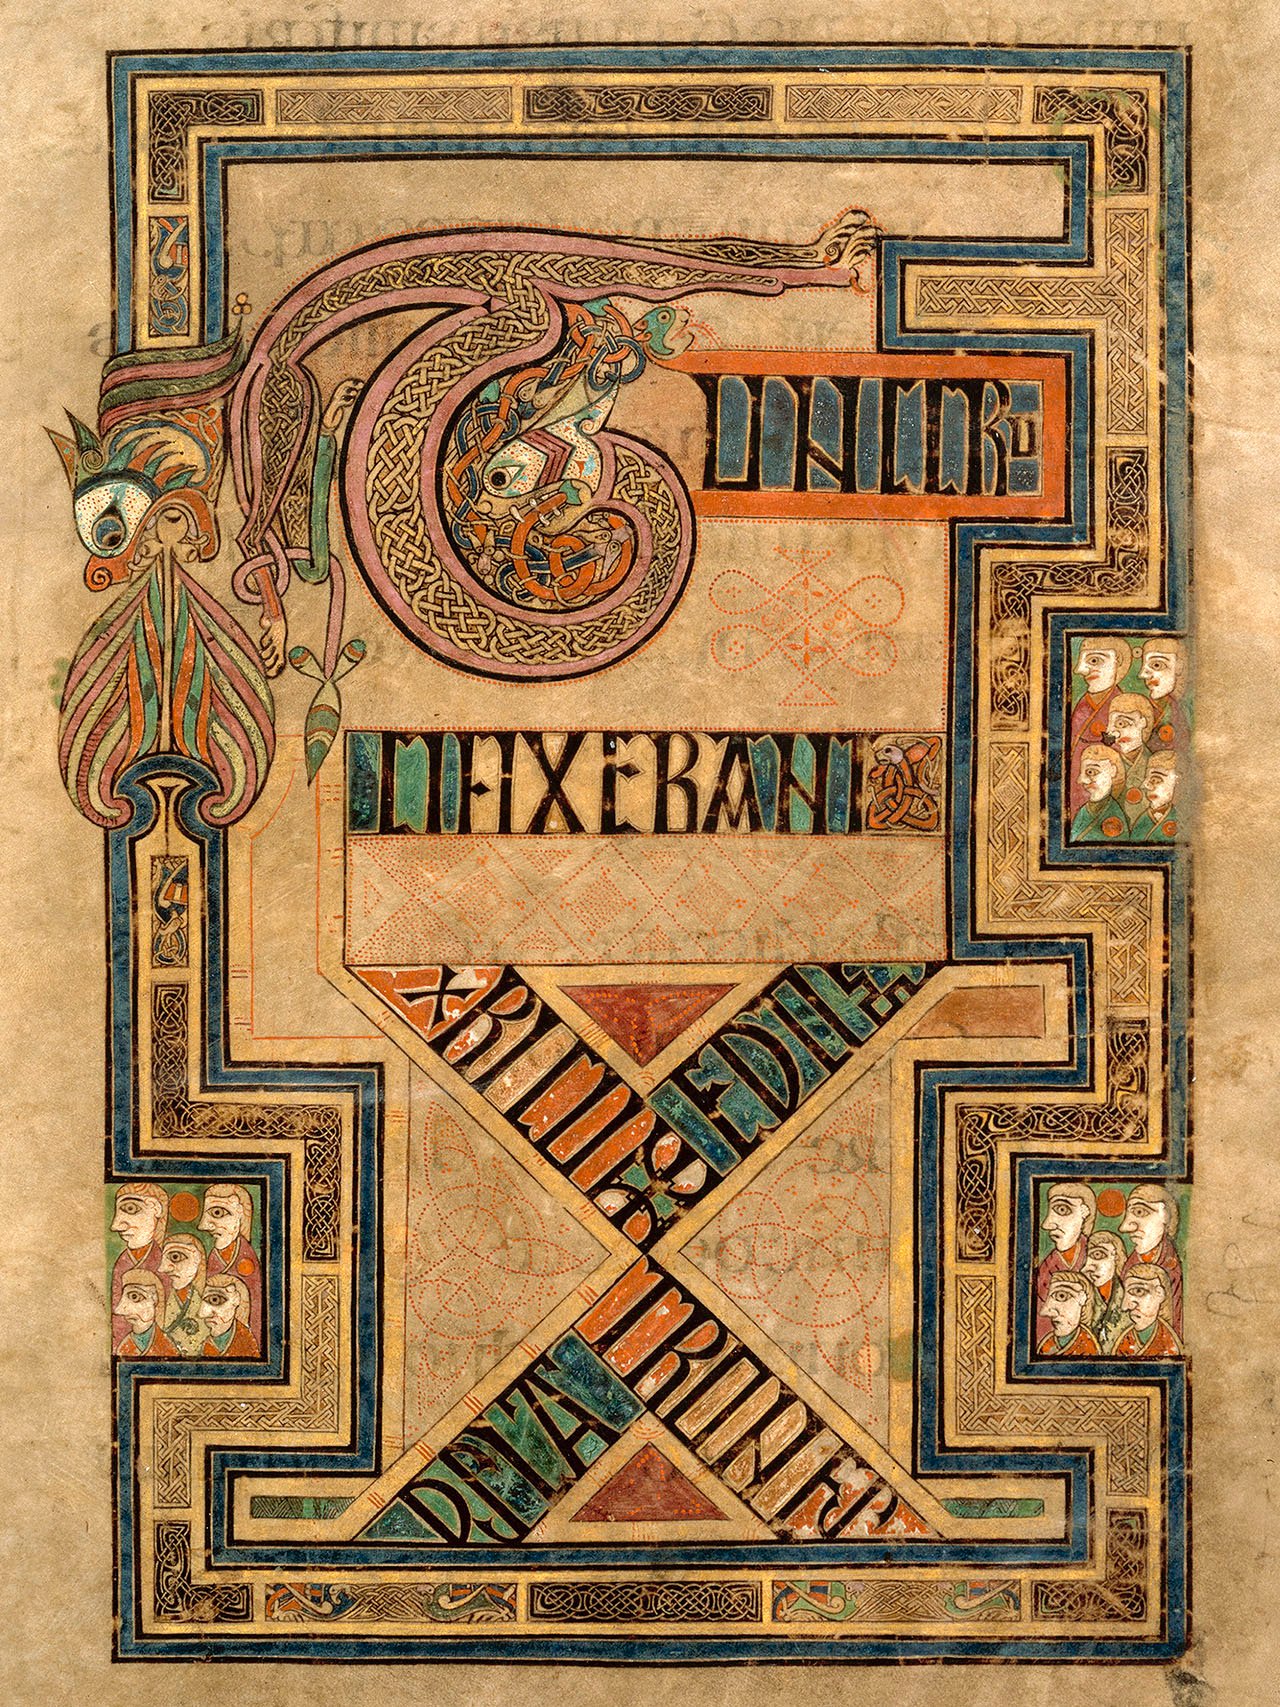 Book of Kells detailed and intricate illuminated manuscipt